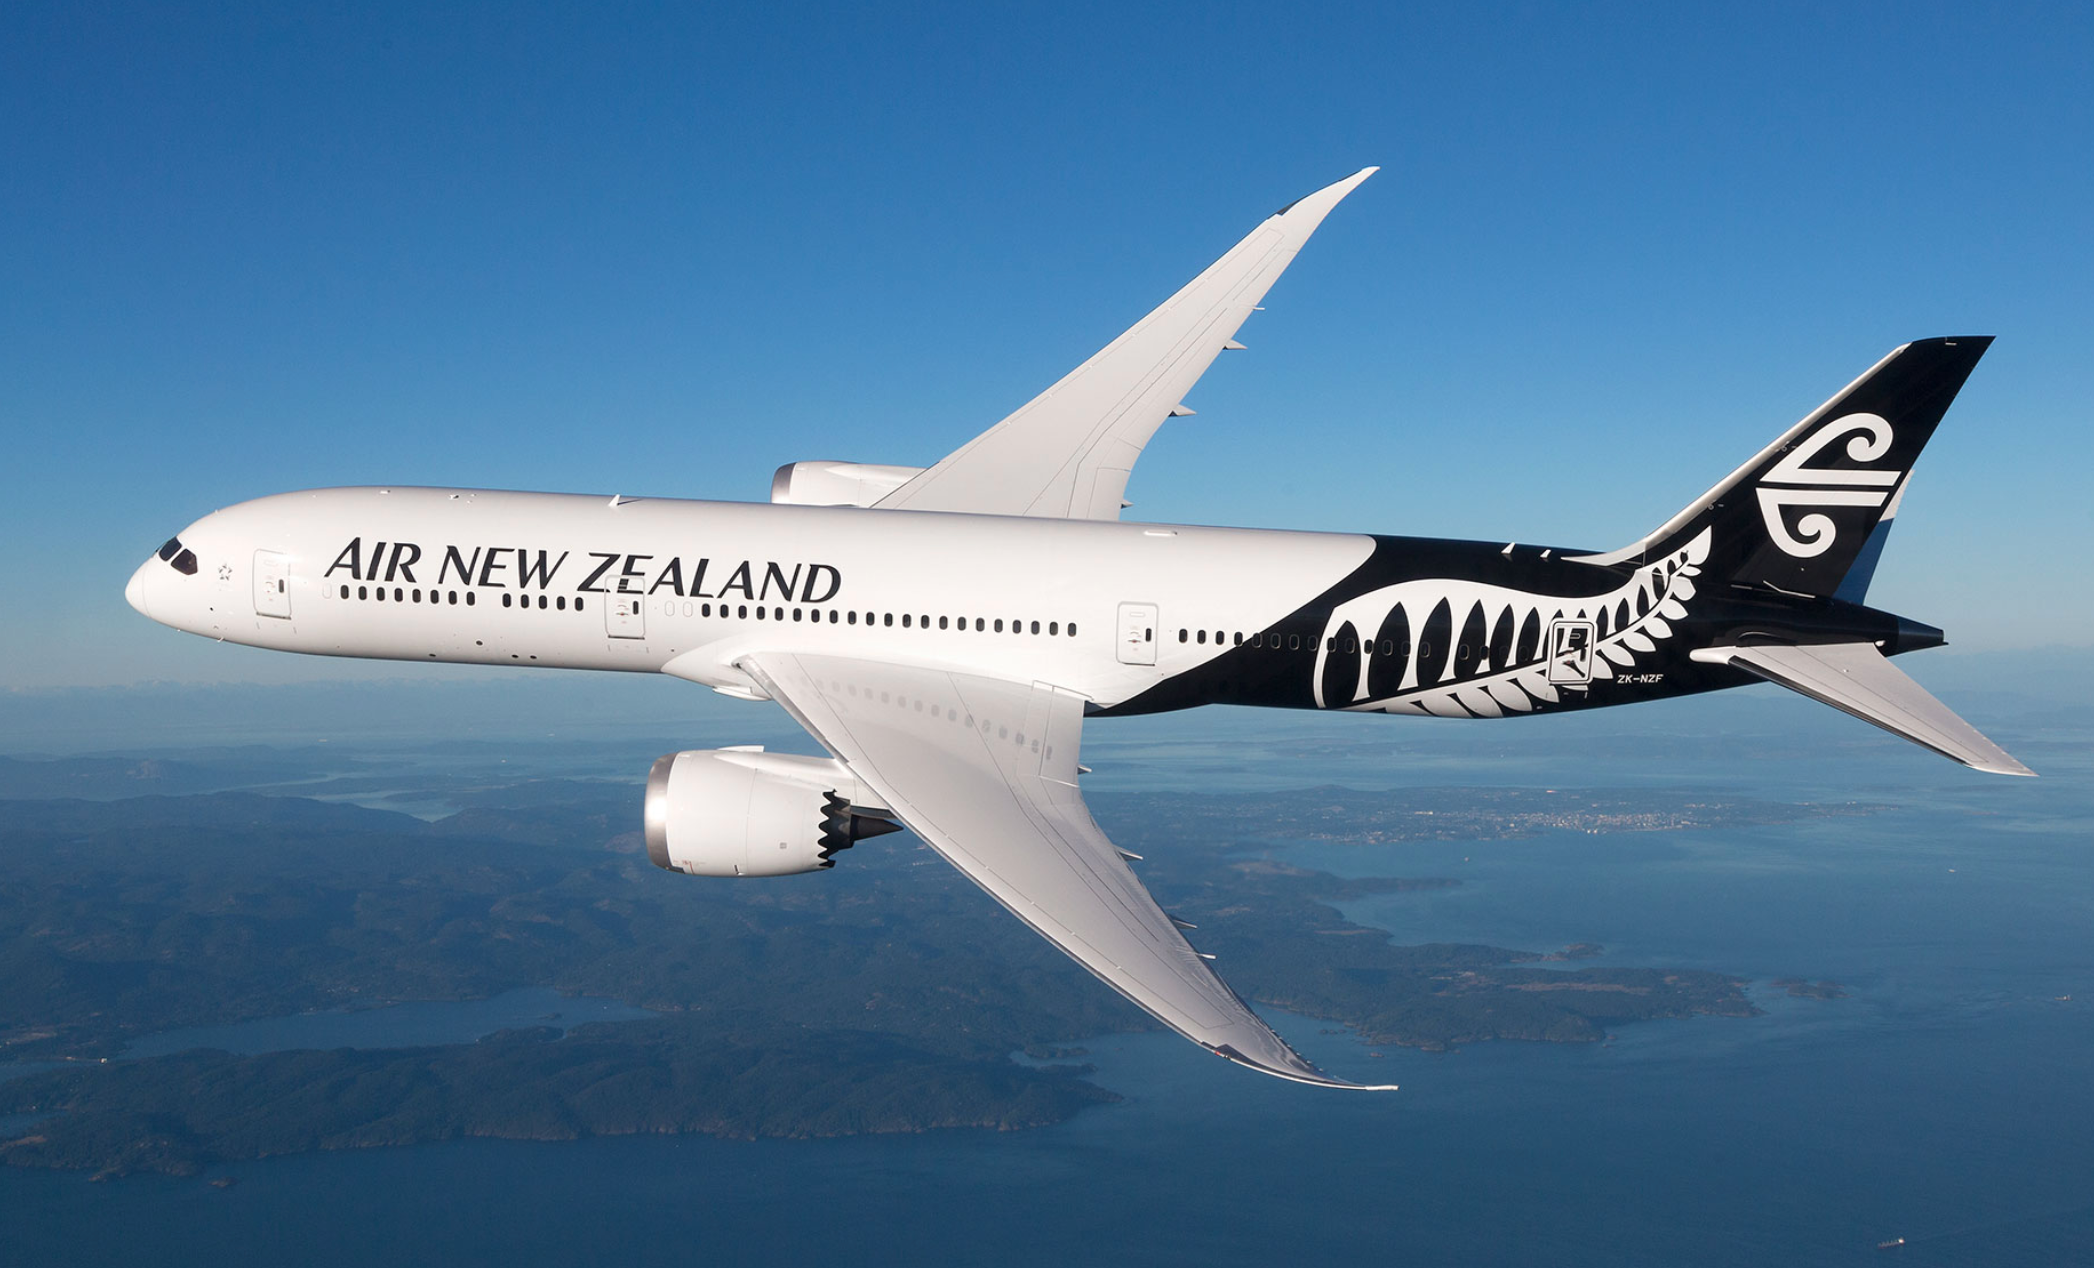 Air new zealand. Boeing 787 Air New Zealand. Самолёт Боинг 787 Air newzeland. Boeing 787-9 Air New Zealand. Air New Zealand авиакомпания.